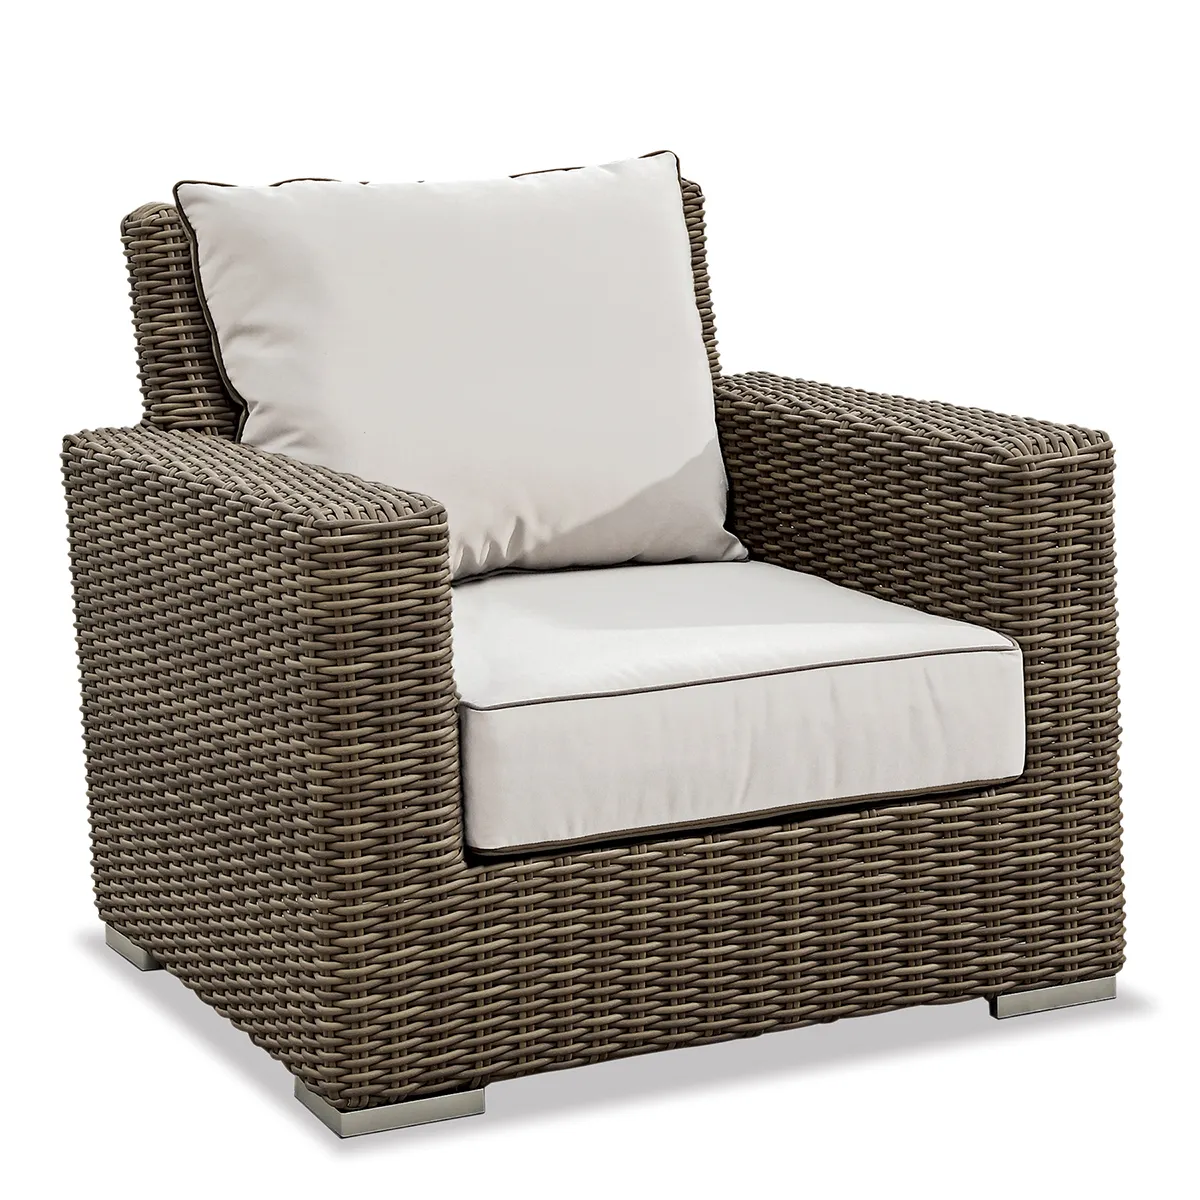 High Quality Outdoor Cushion Waterproof Chair Pad Waterproof Cushion Cover